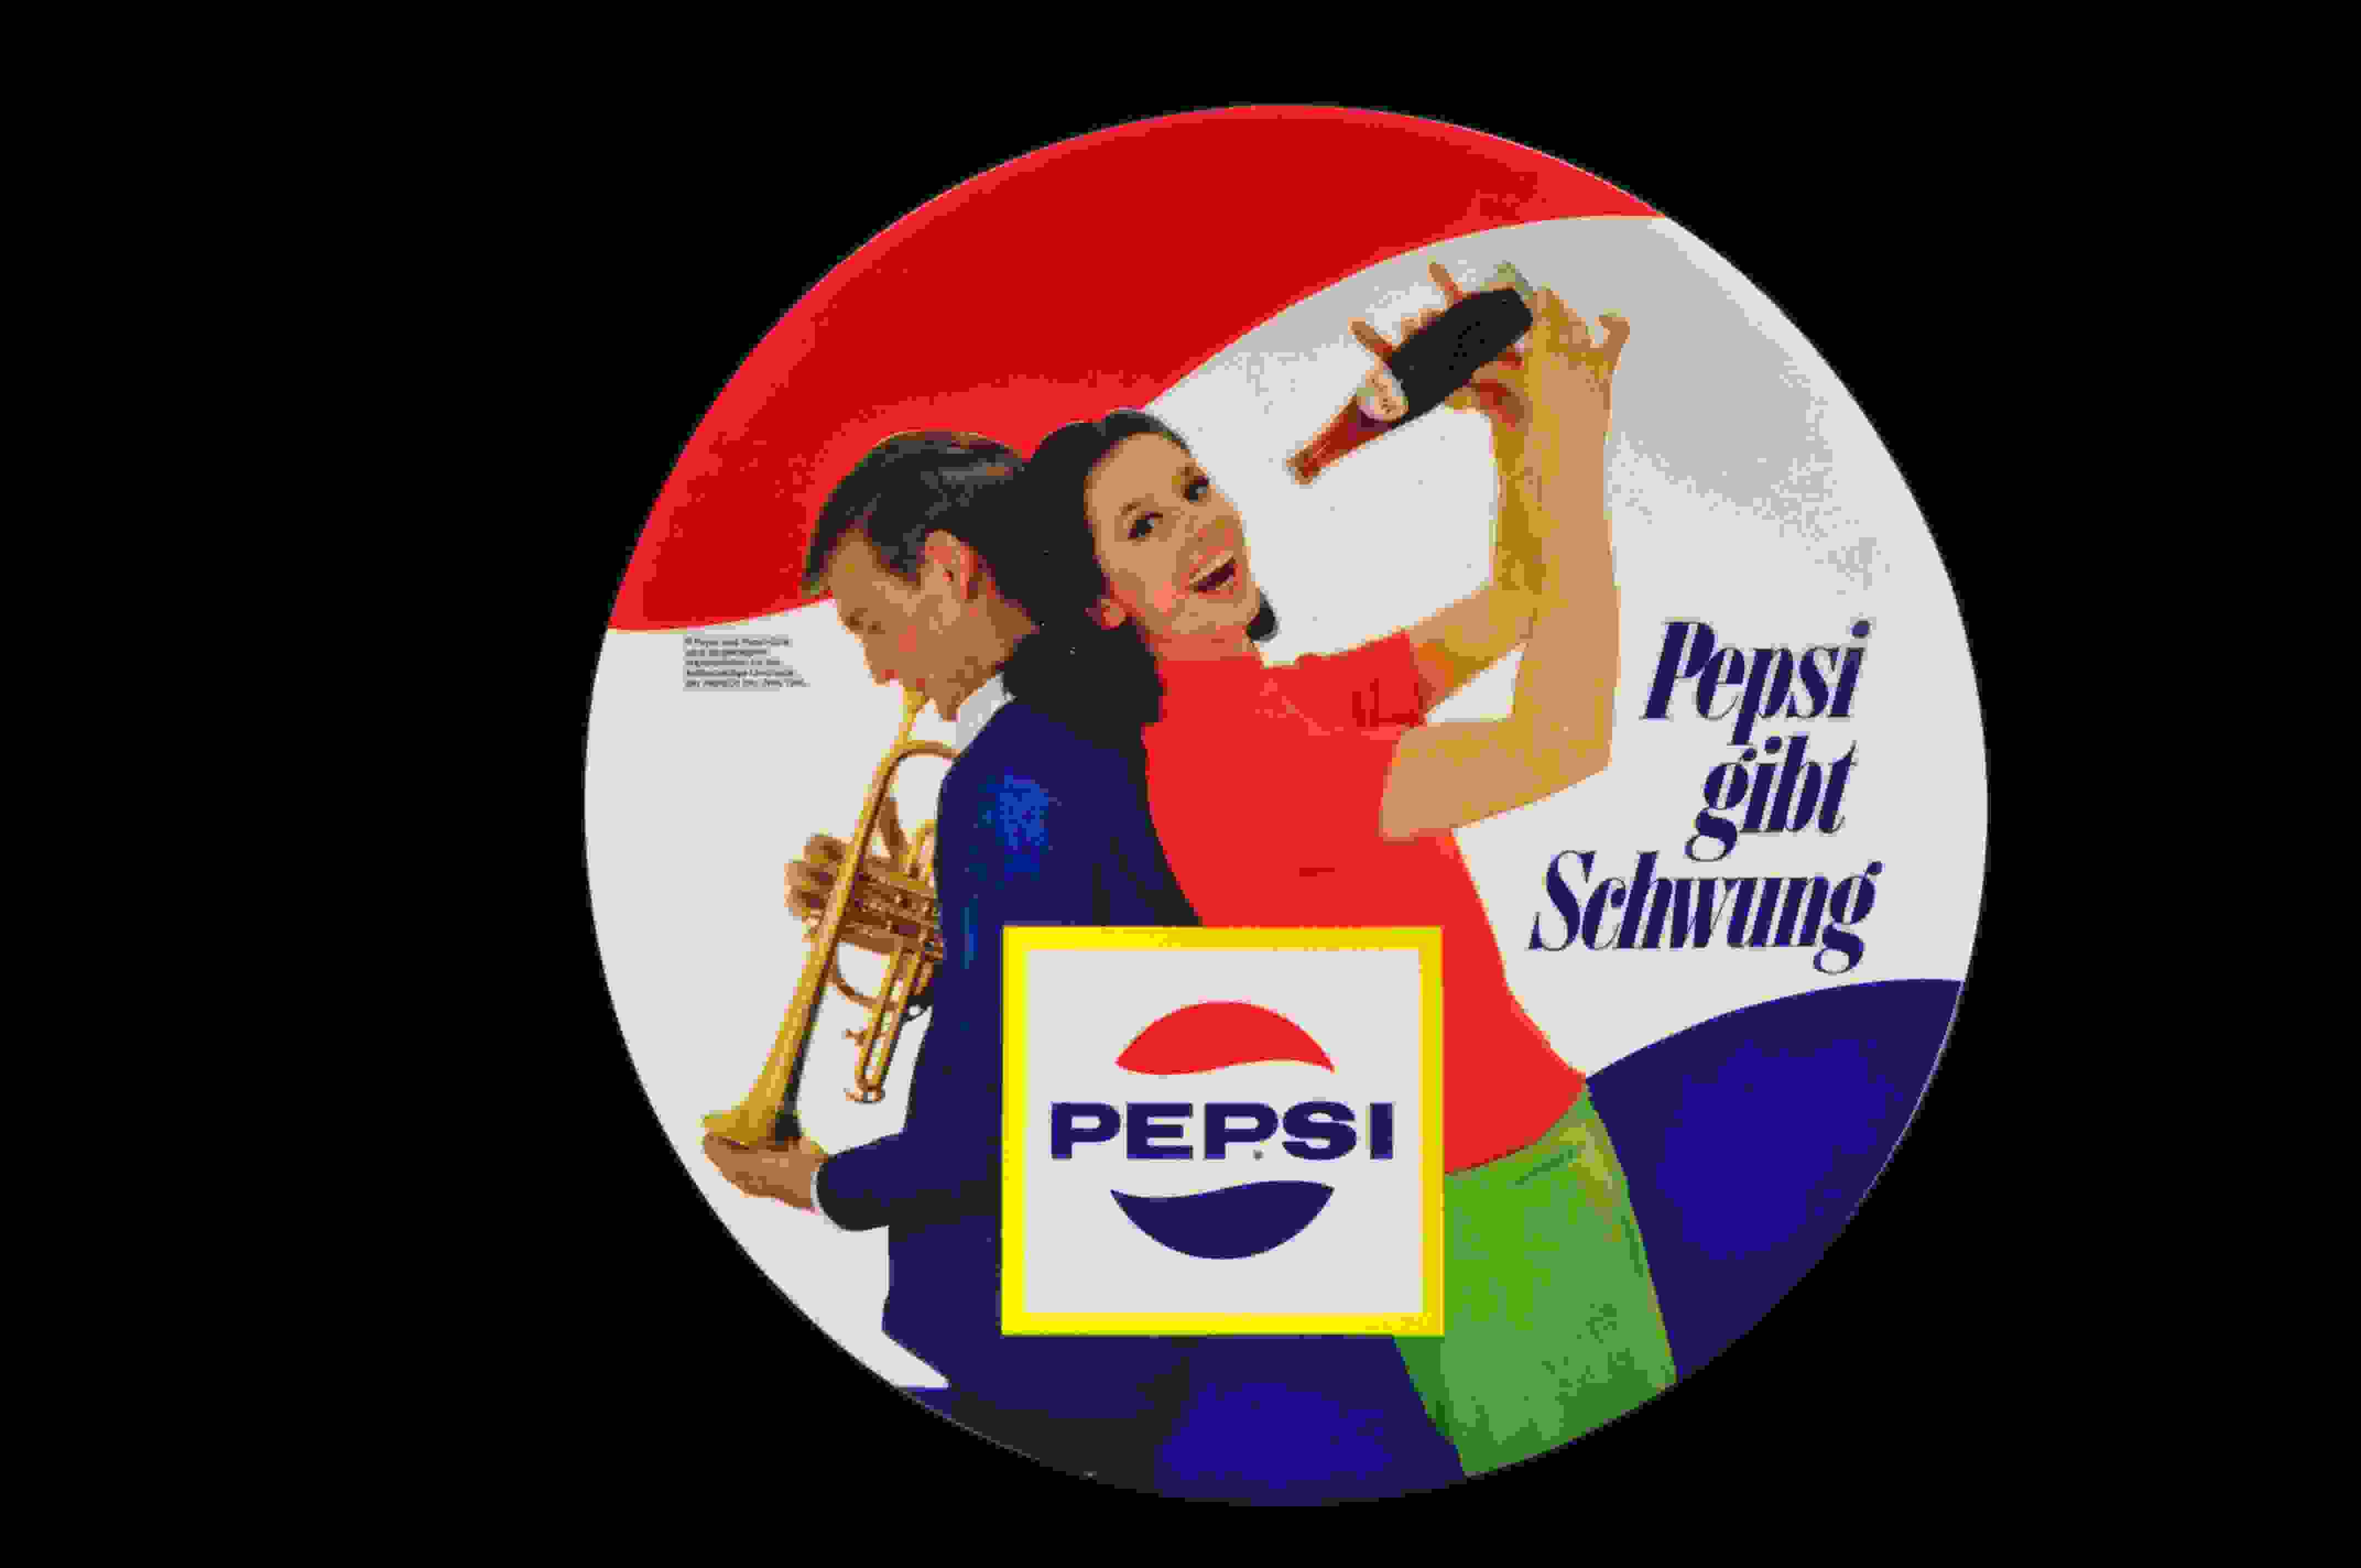 Pepsi gibt Schwung Wandteller 